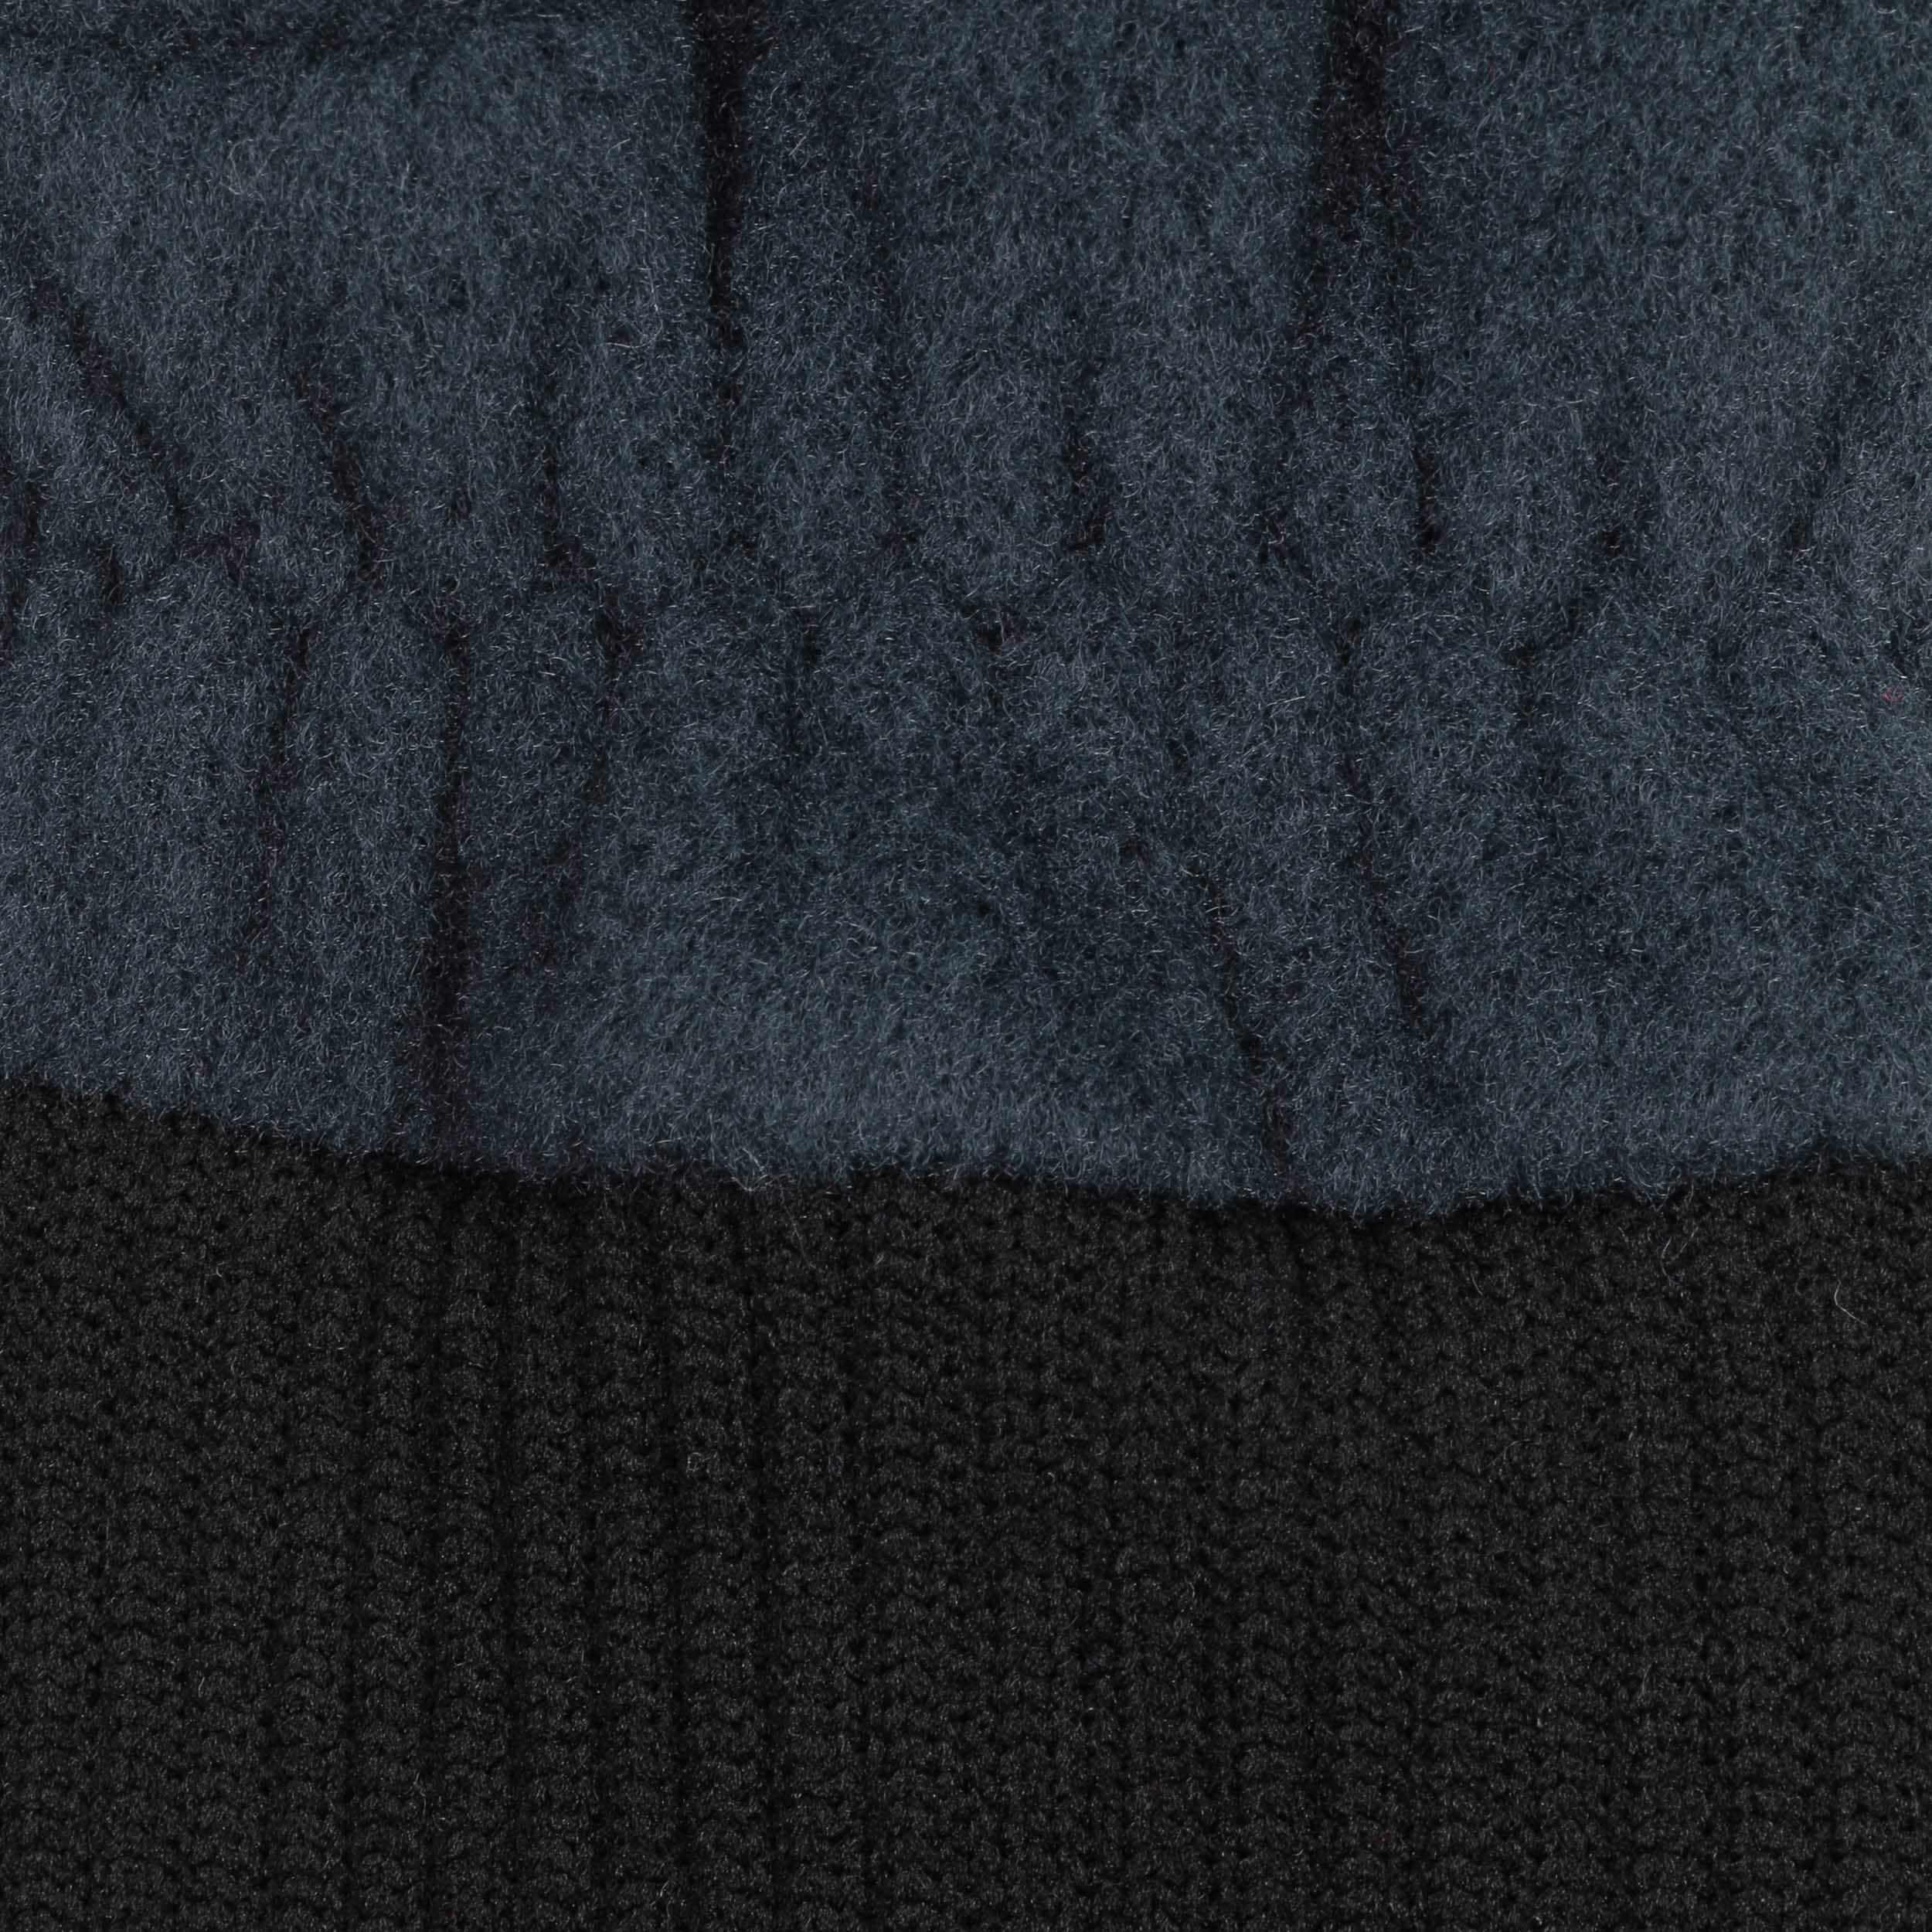 Vertigo Fleece Gloves by Jack Wolfskin - 37,95 €